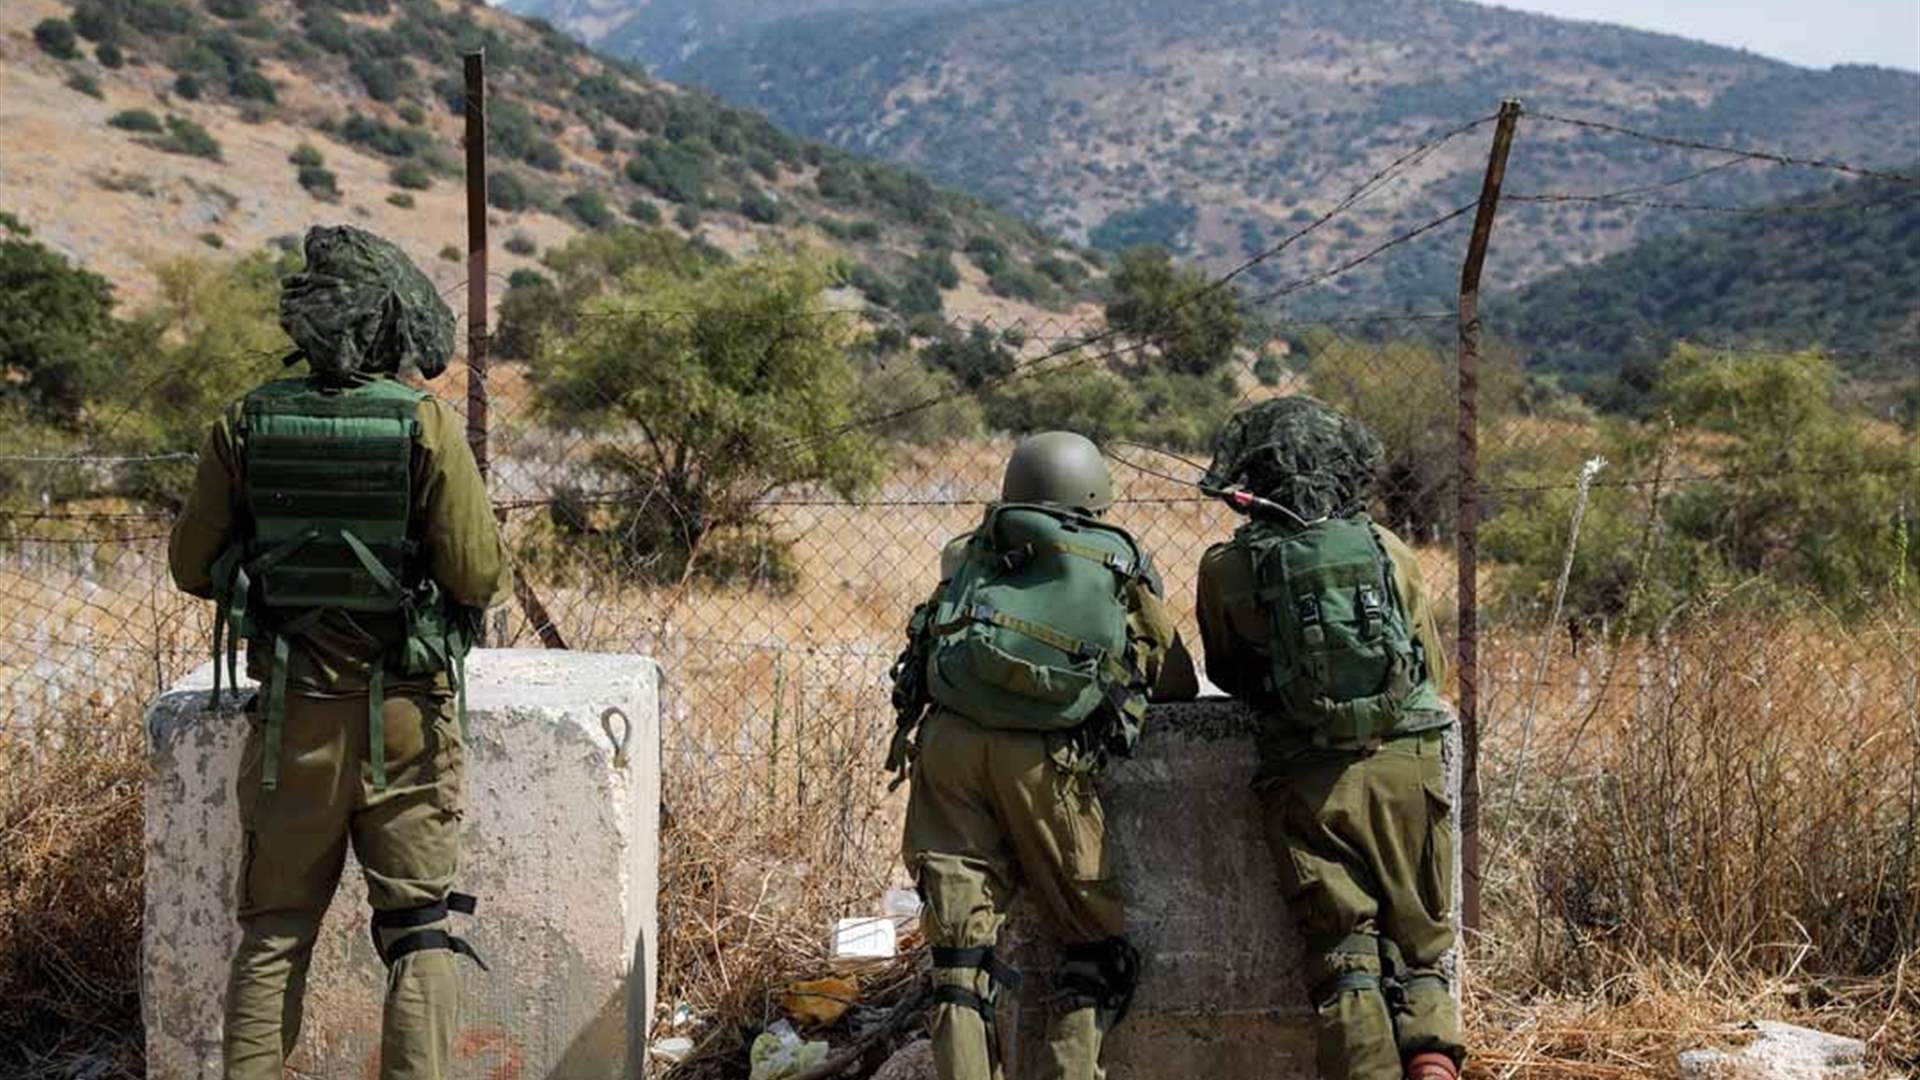 Israeli army confirms soldiers injured inside Lebanese territory